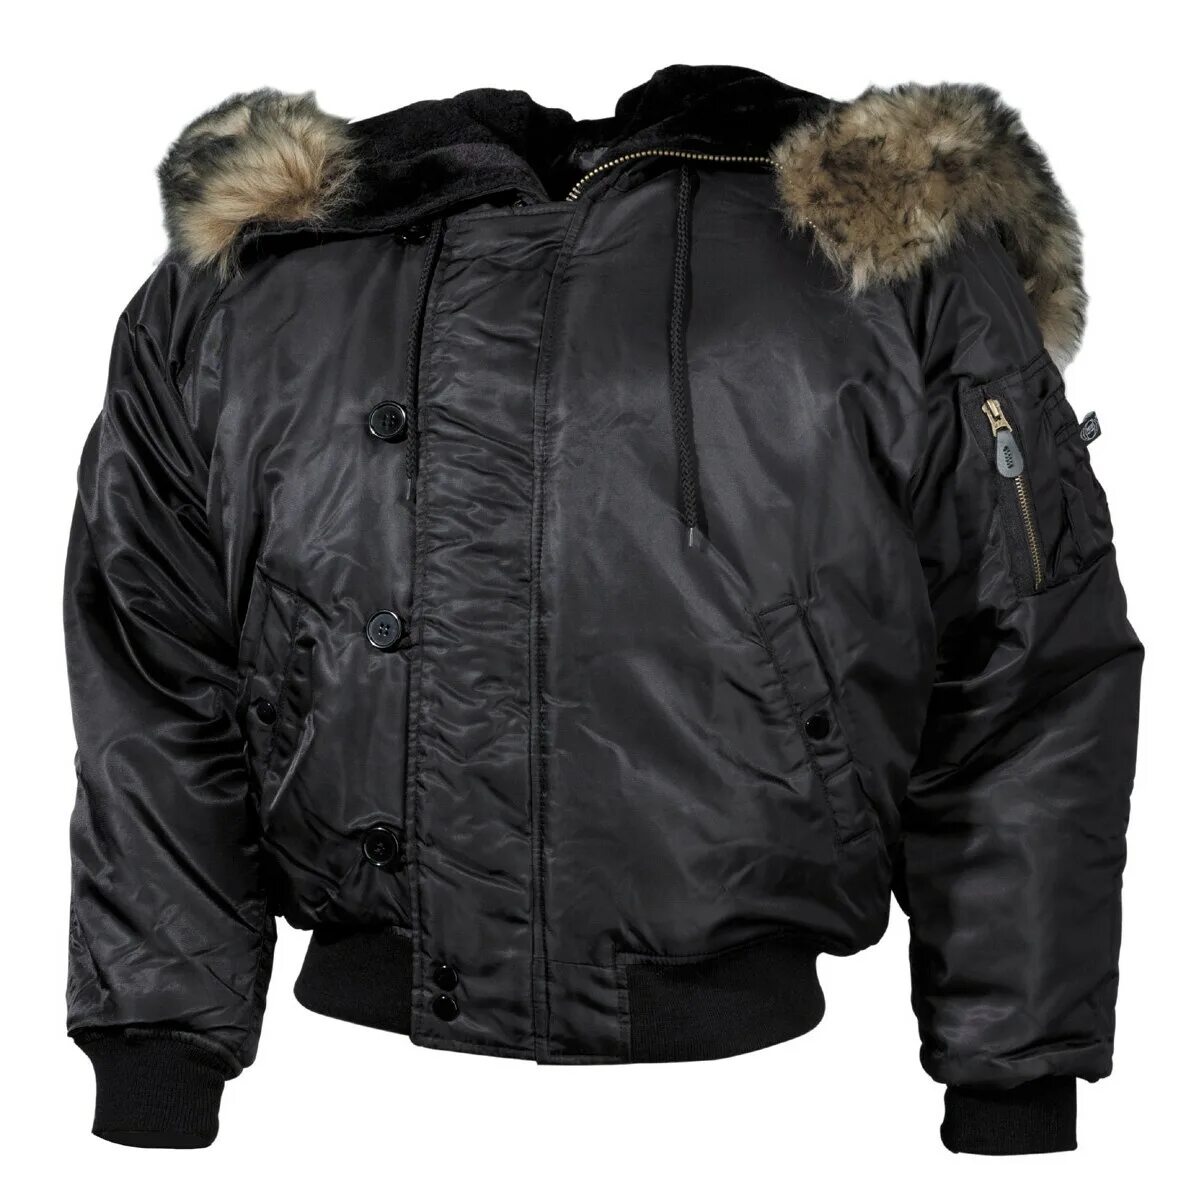 Короткую аляску. N2b куртка. Куртка мужская Аляска 2.183. Куртка Аляска укороченная n-2b Black. Бомбер Аляска.